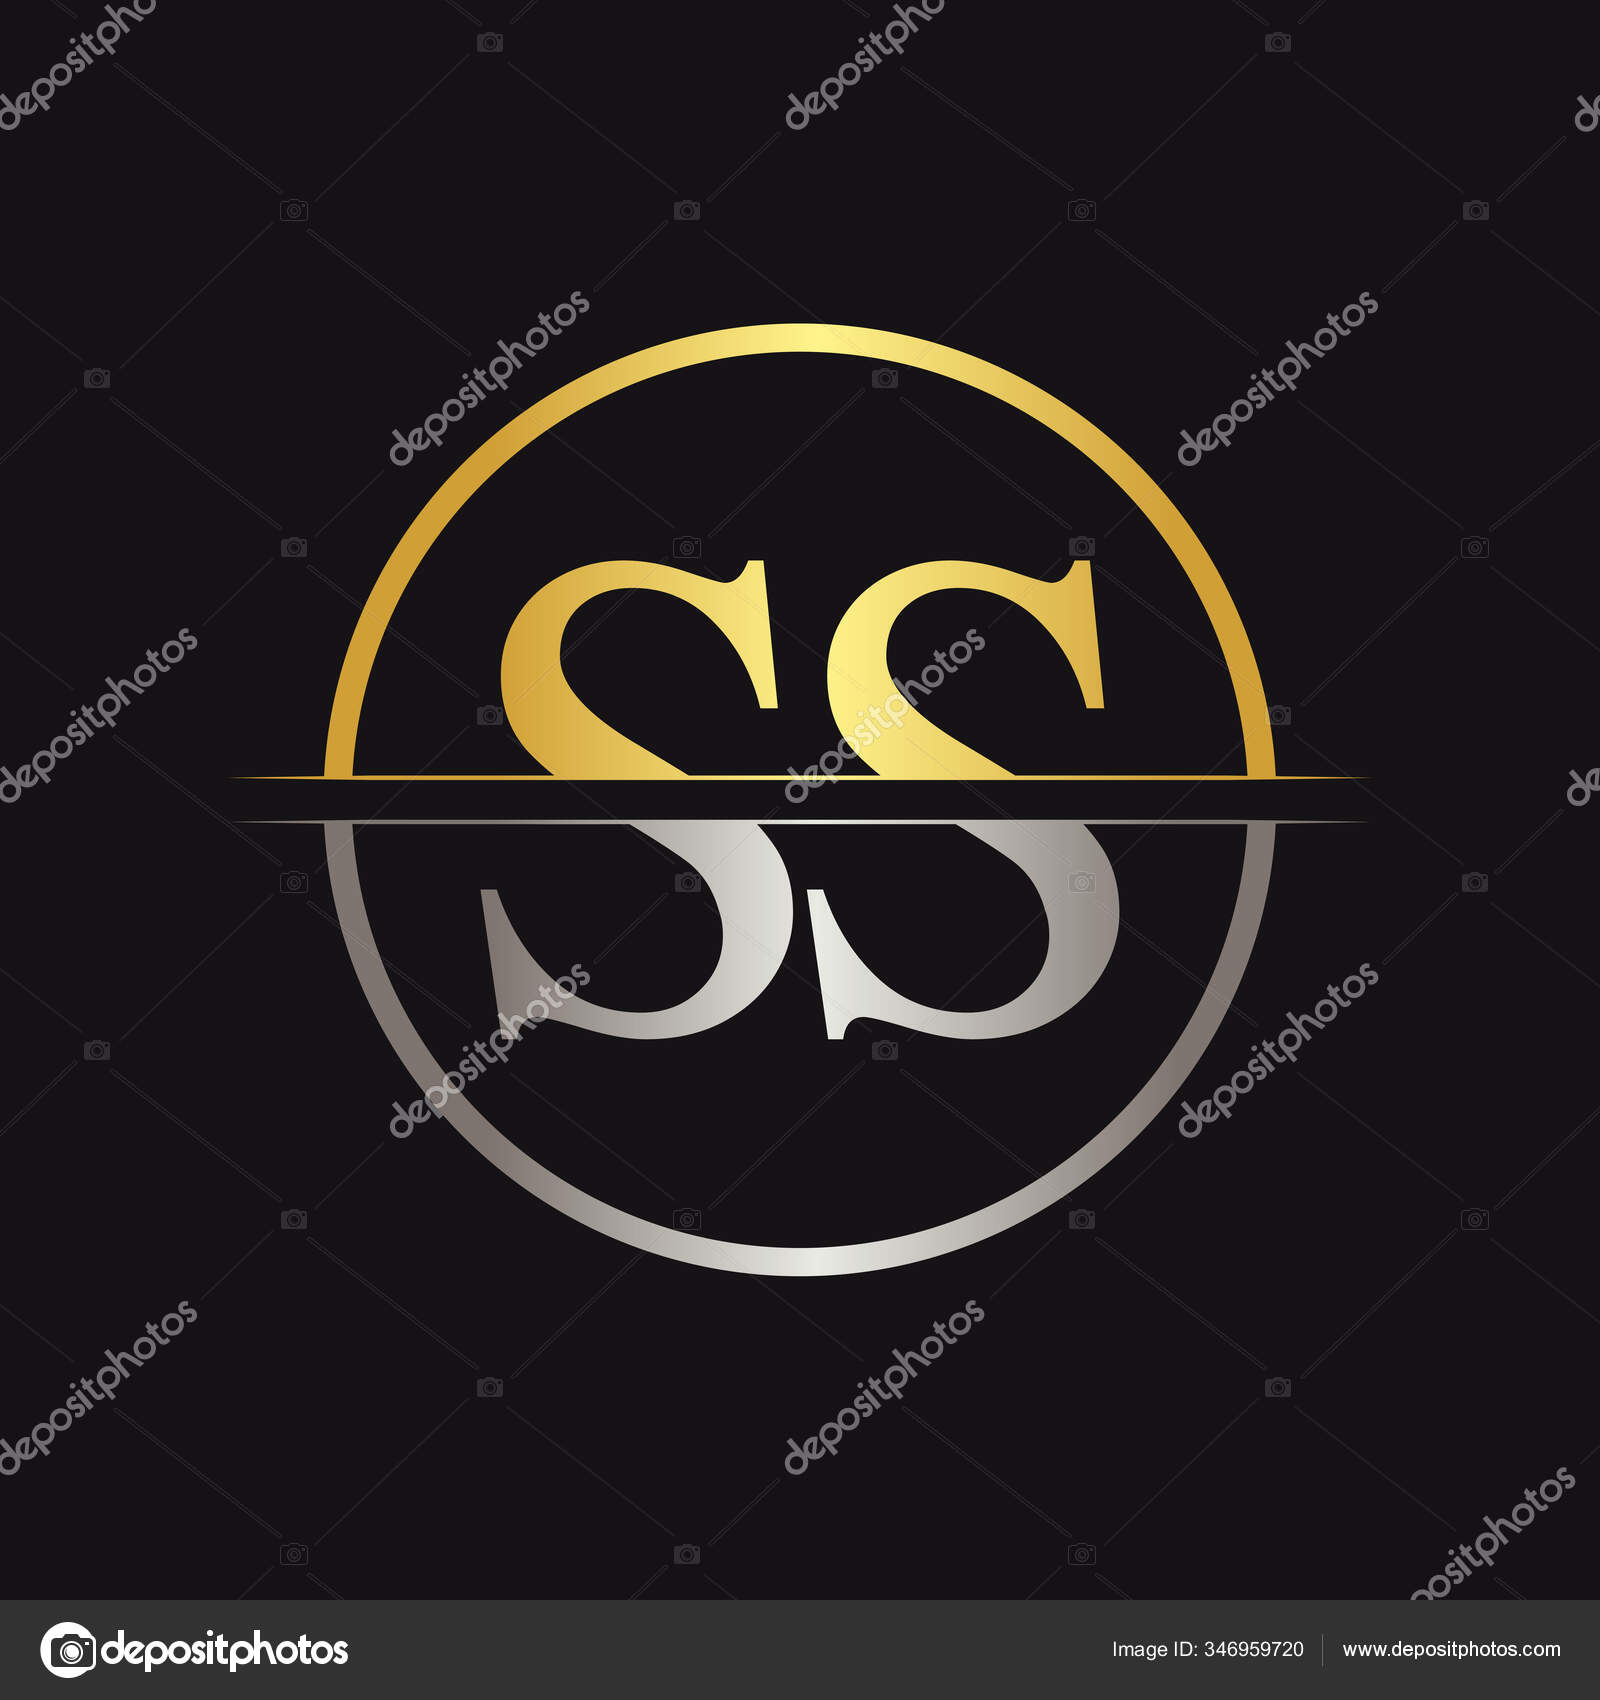 1 842 Ss Logo Vector Images Free Royalty Free Ss Logo Vectors Depositphotos